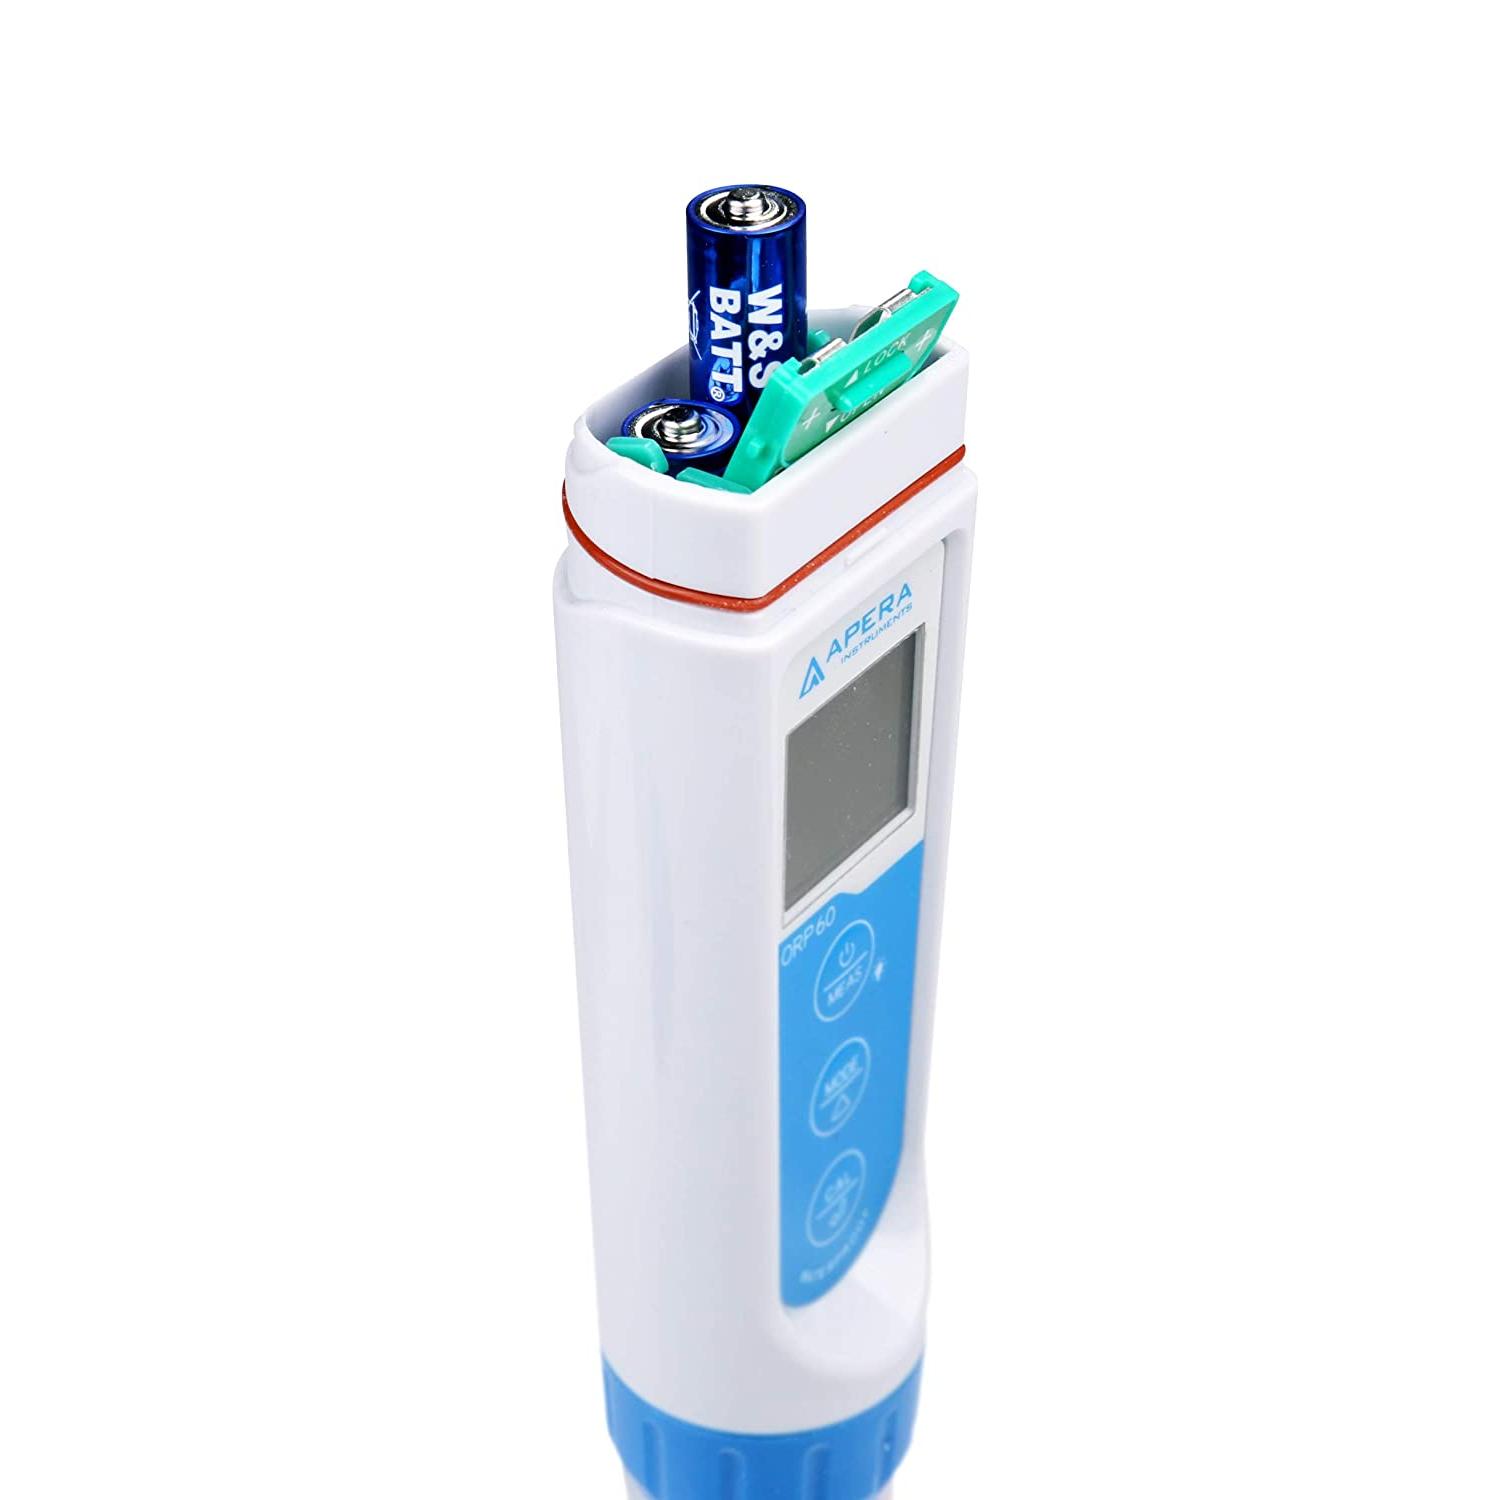 Easy Switch of EC/TDS/Salinity Apera Instruments EC60 Premium Waterproof Conductivity Pocket Tester Replaceable BPB Sensor ±1% F.S Accuracy